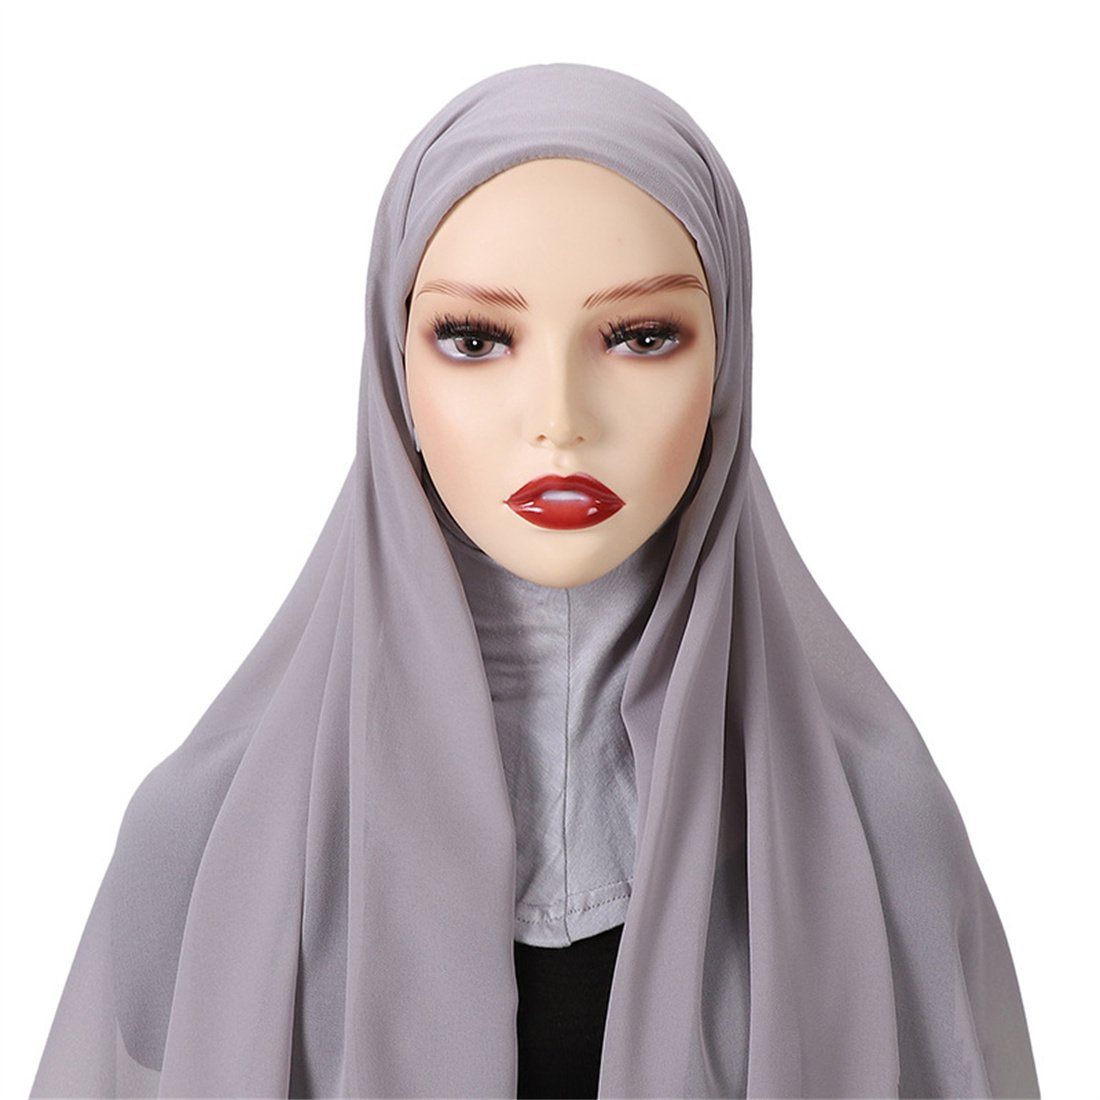 DÖRÖY Seidenschal Frauenkopfbedeckung Sarong, Sarong, Kopfbedeckung Grau